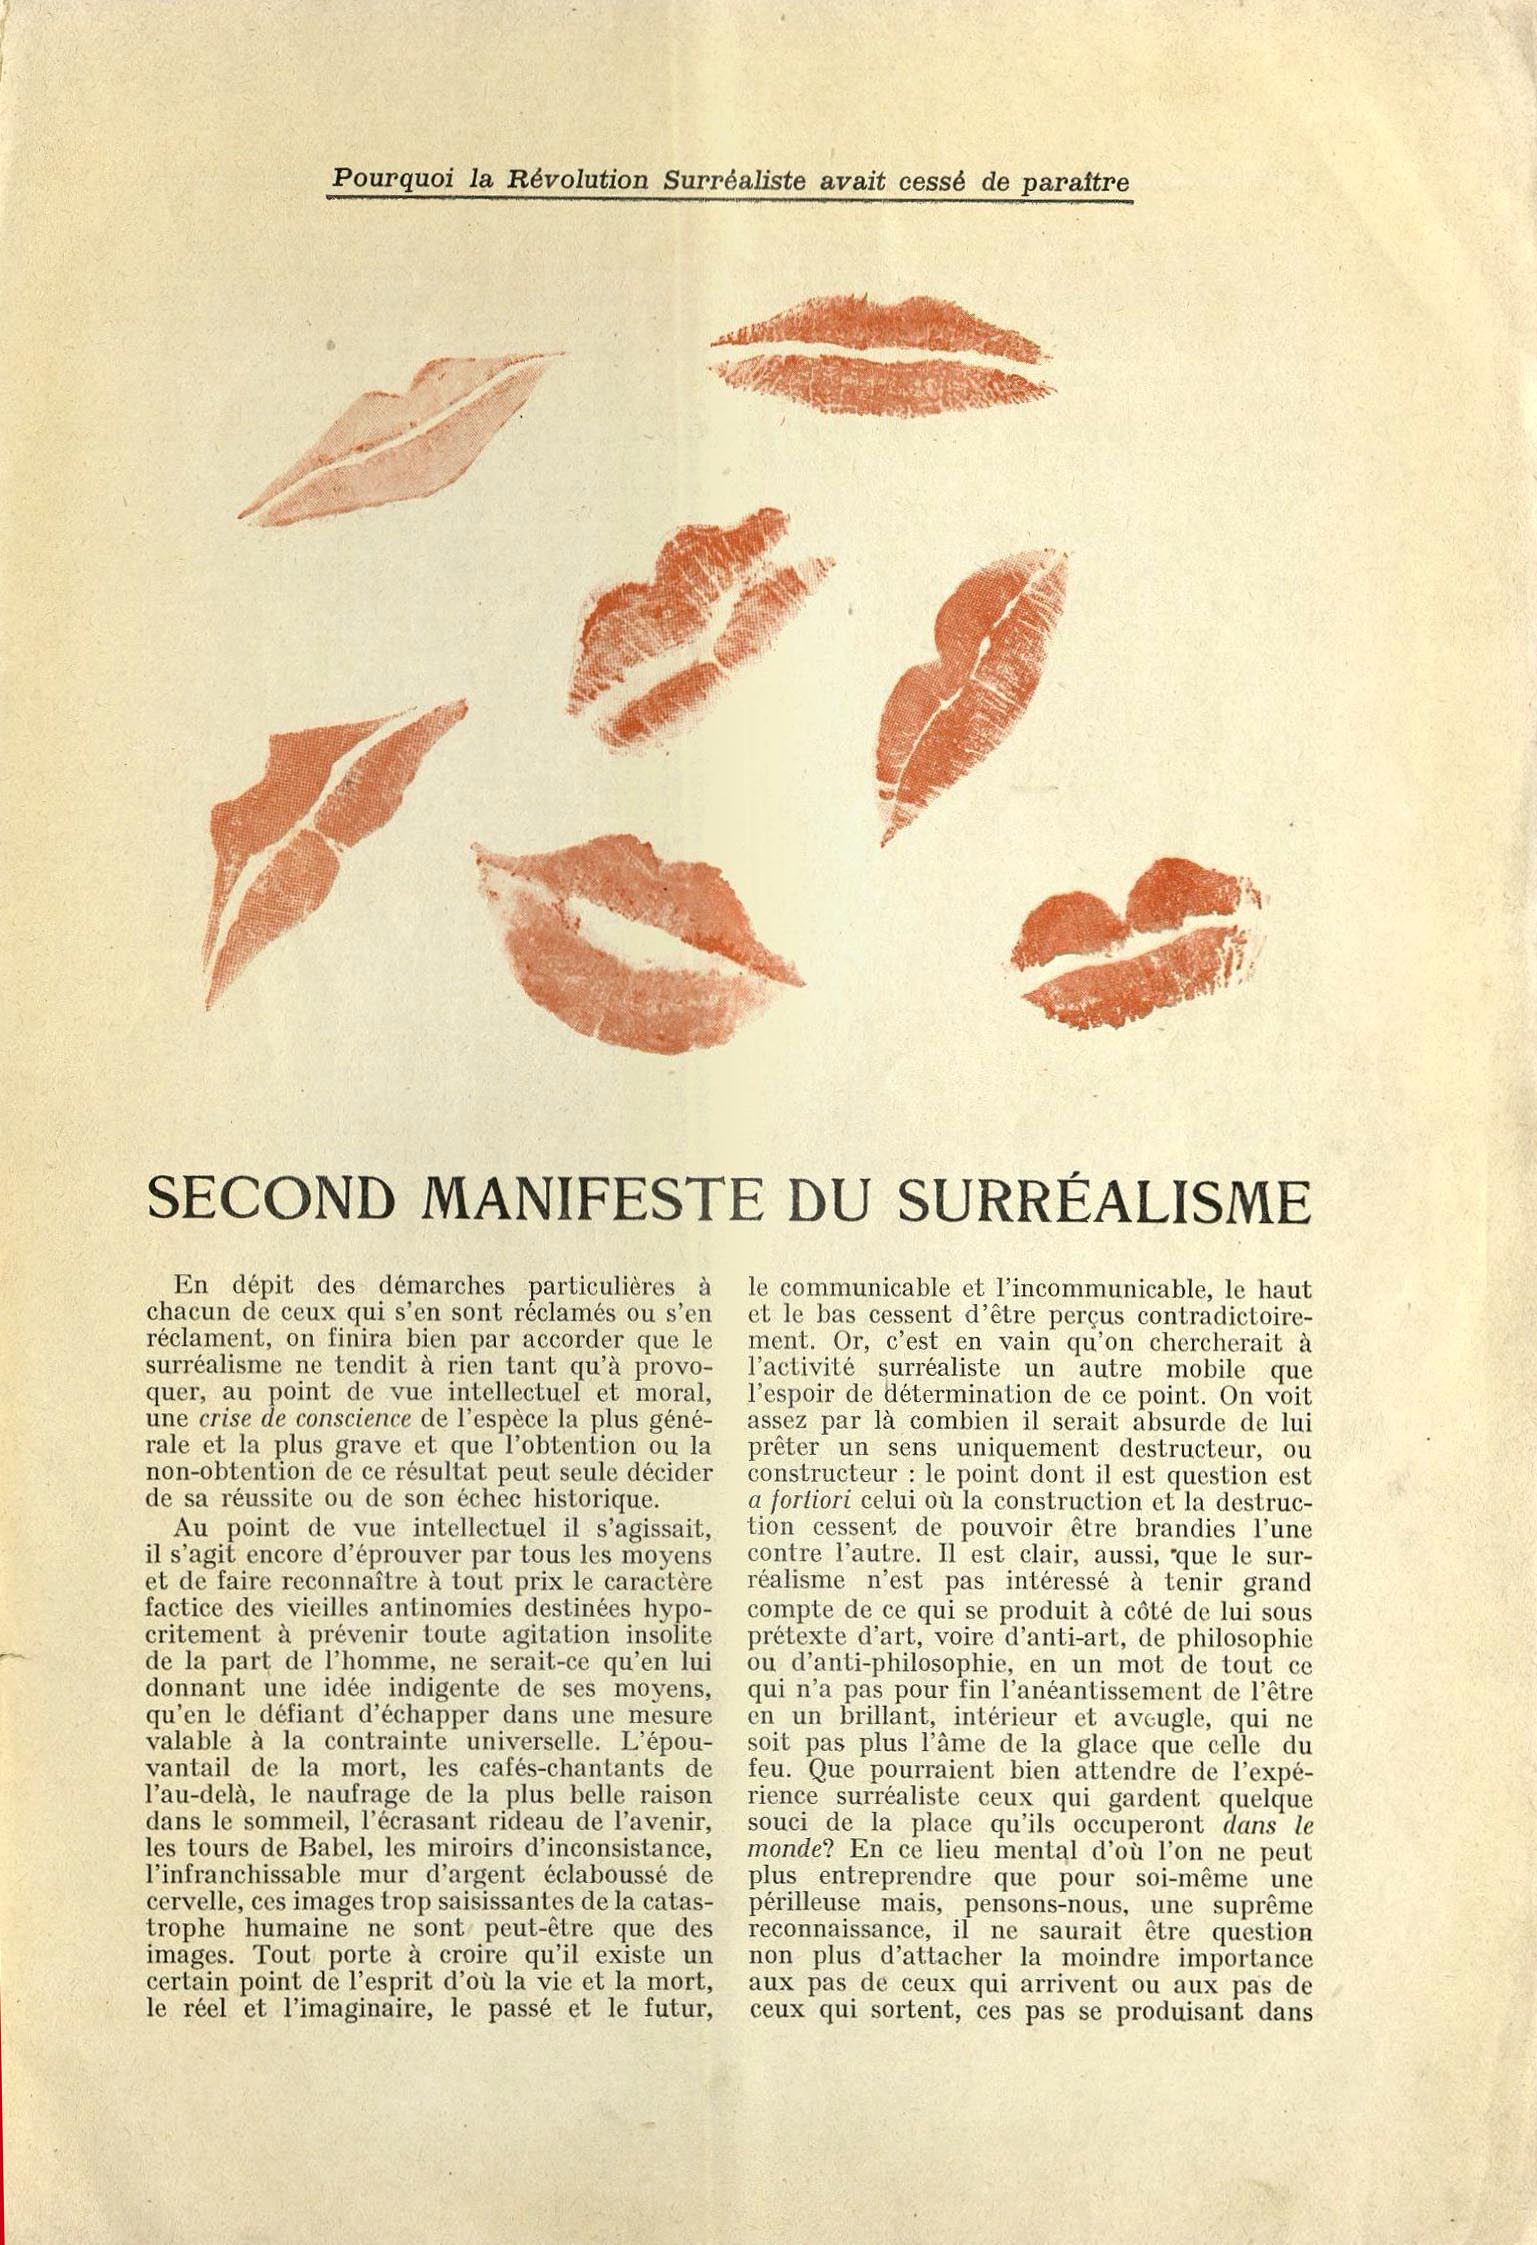 andre breton manifesto of surrealism